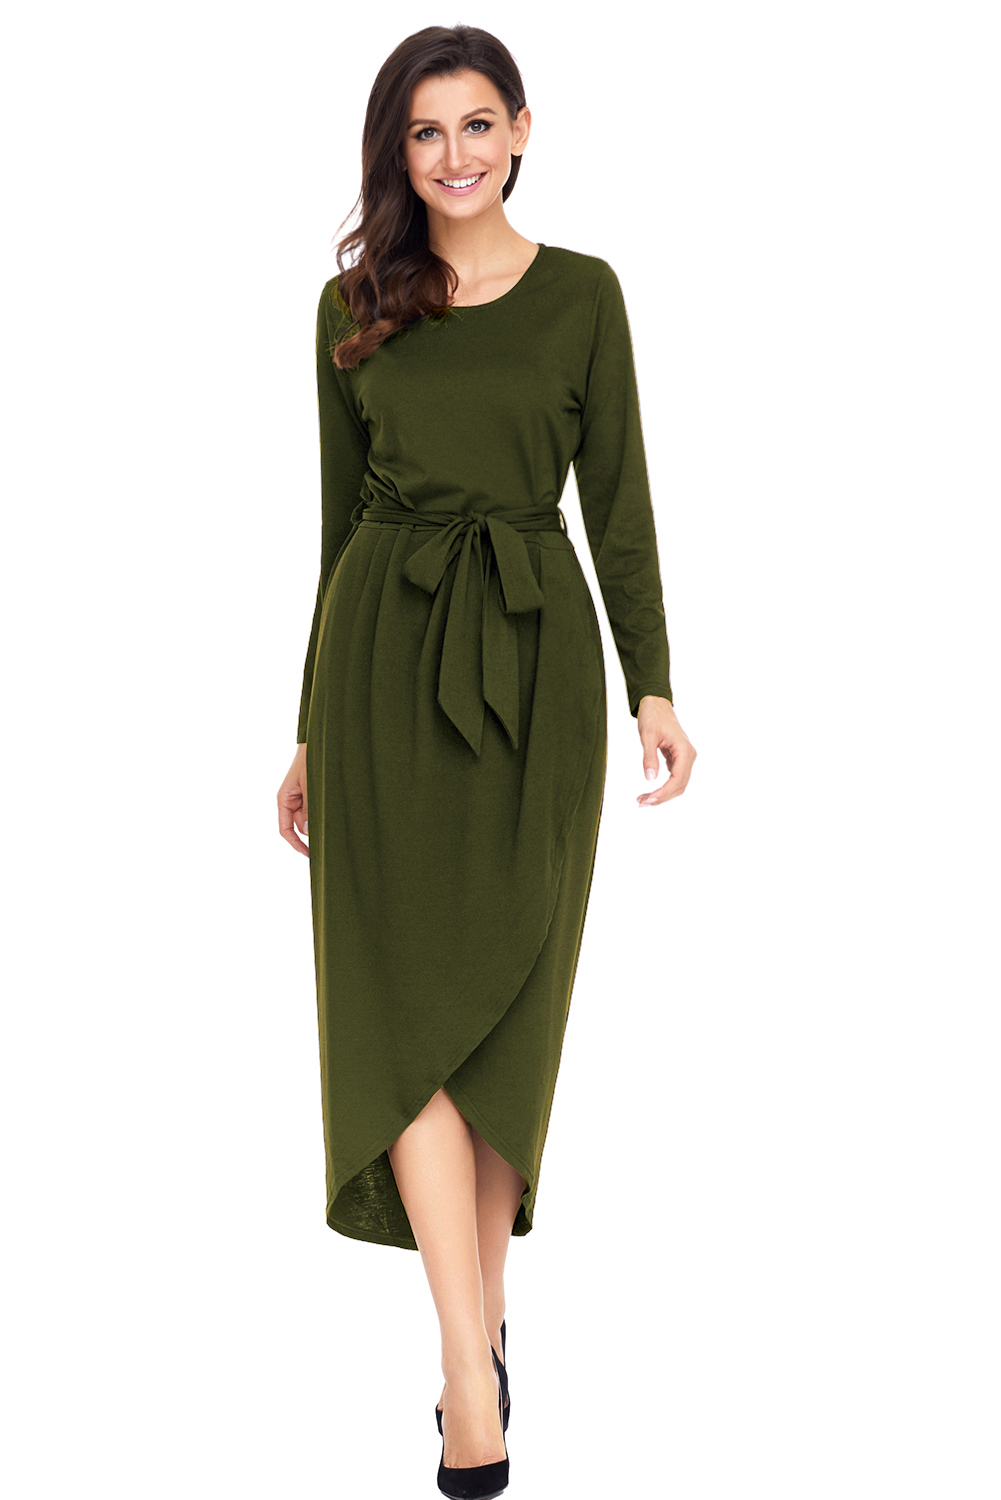 BY61818-9 Olive Tulip Faux Wrap Sash Tie Jersey Dress